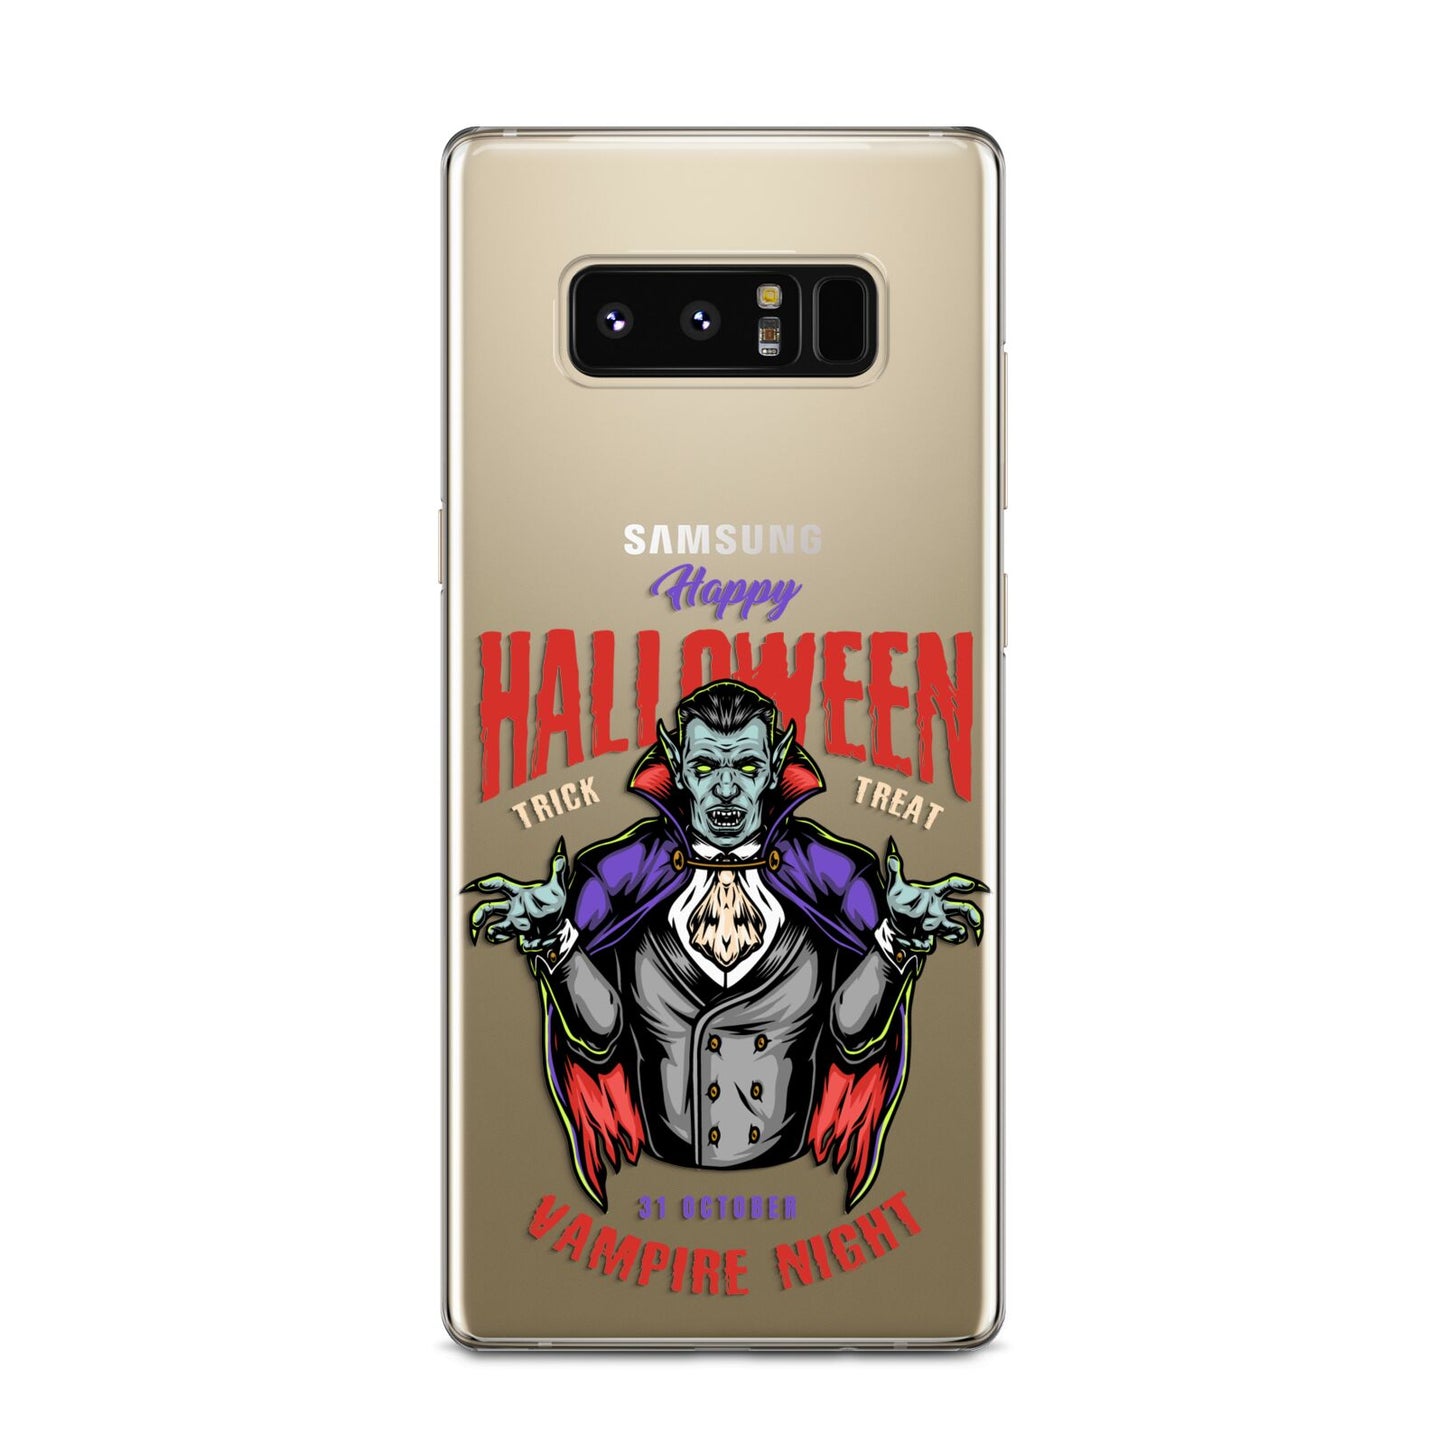 Vampire Night Samsung Galaxy Note 8 Case